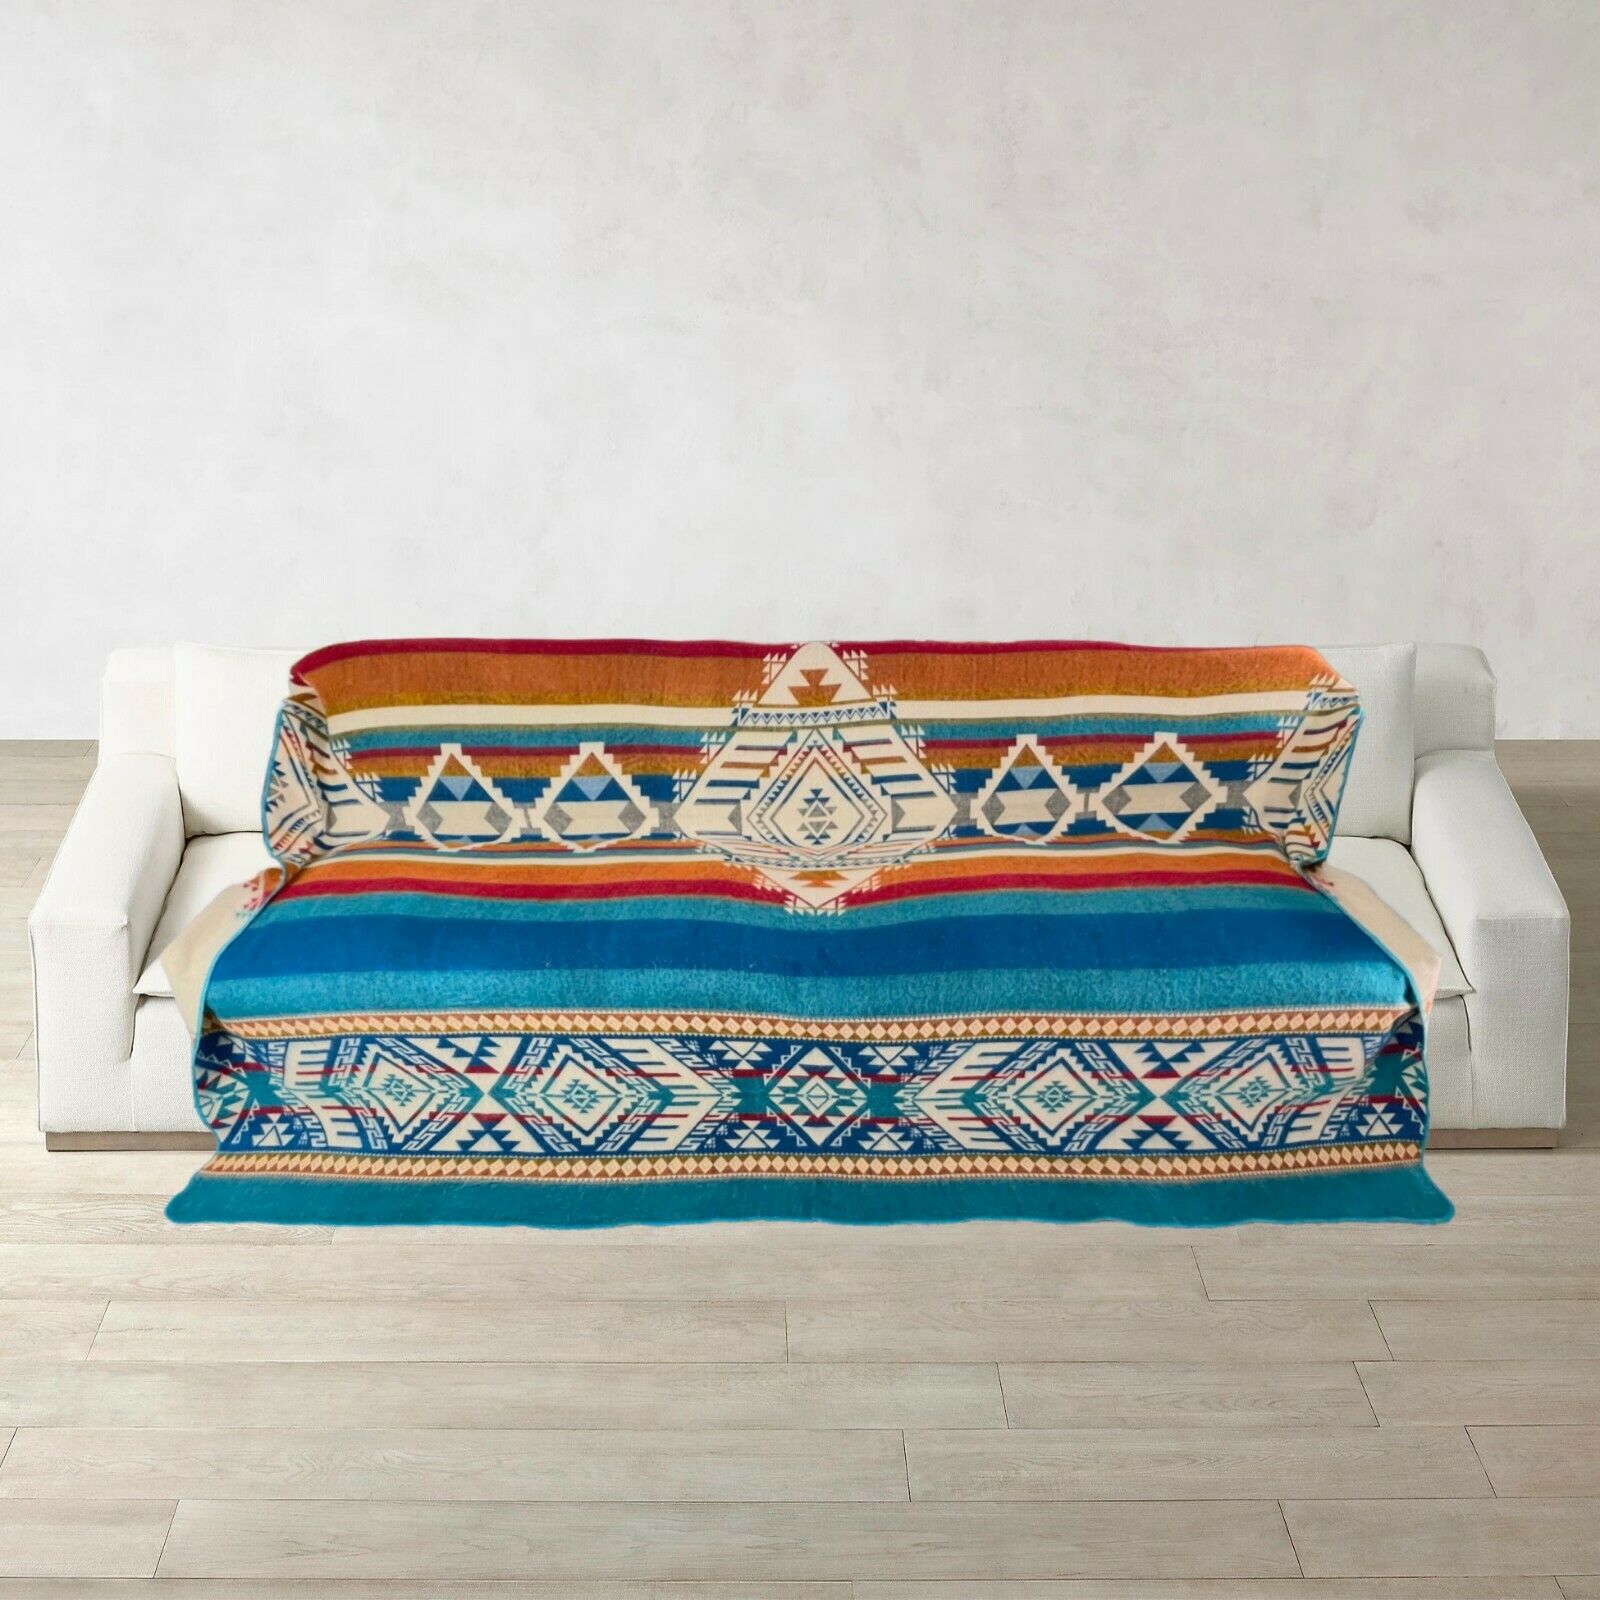 Quilotoa - Baby Alpaca Blanket - Extra Large - Reversible Aztec Pattern - turquoise-blue-cream